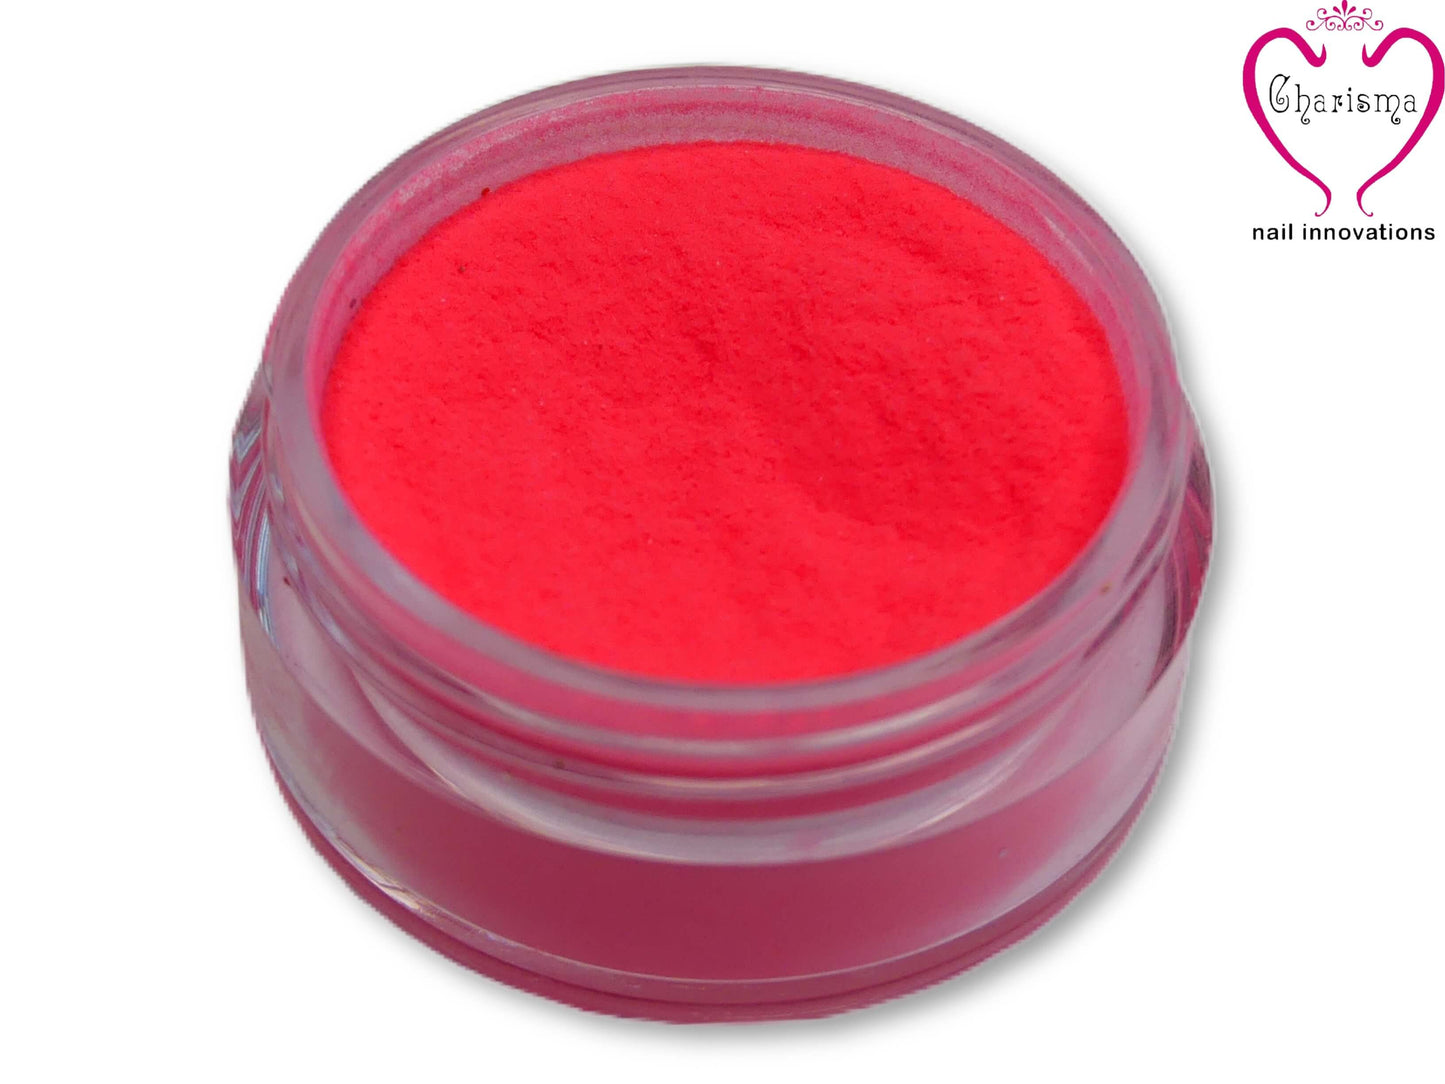 Charisma Nail Acrylic Powder - Neon Pink Orange - My Little Nail Art Shop